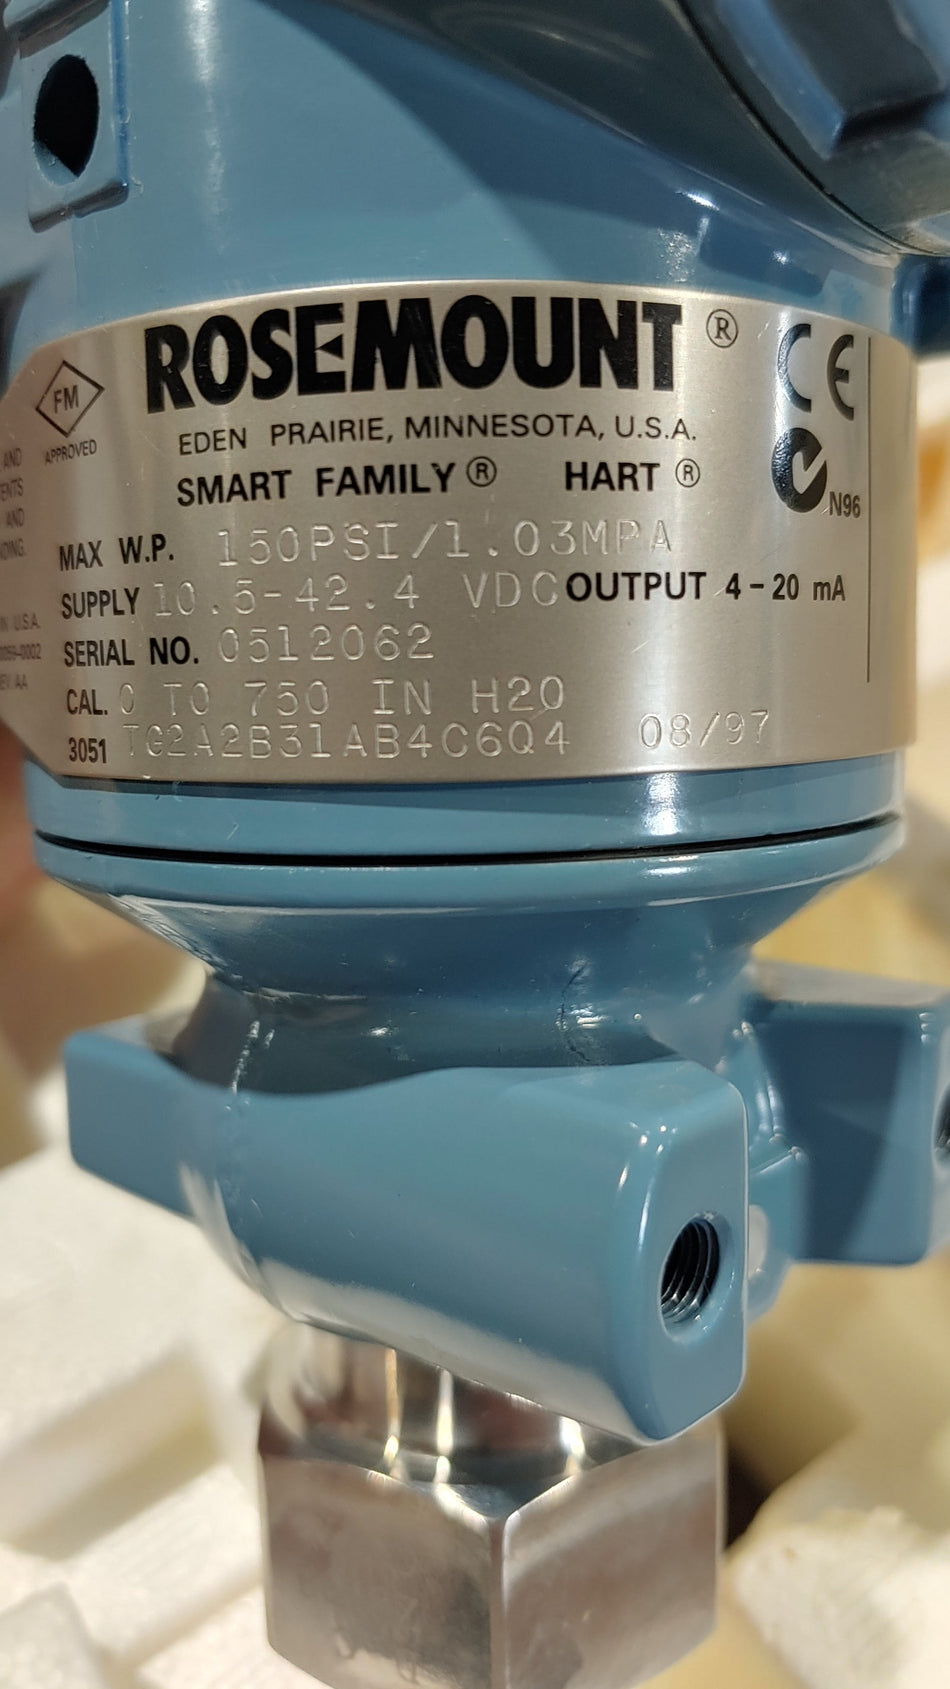 Rosemount Pressure Transmitter 3051TG2A2B31AB4C6Q4